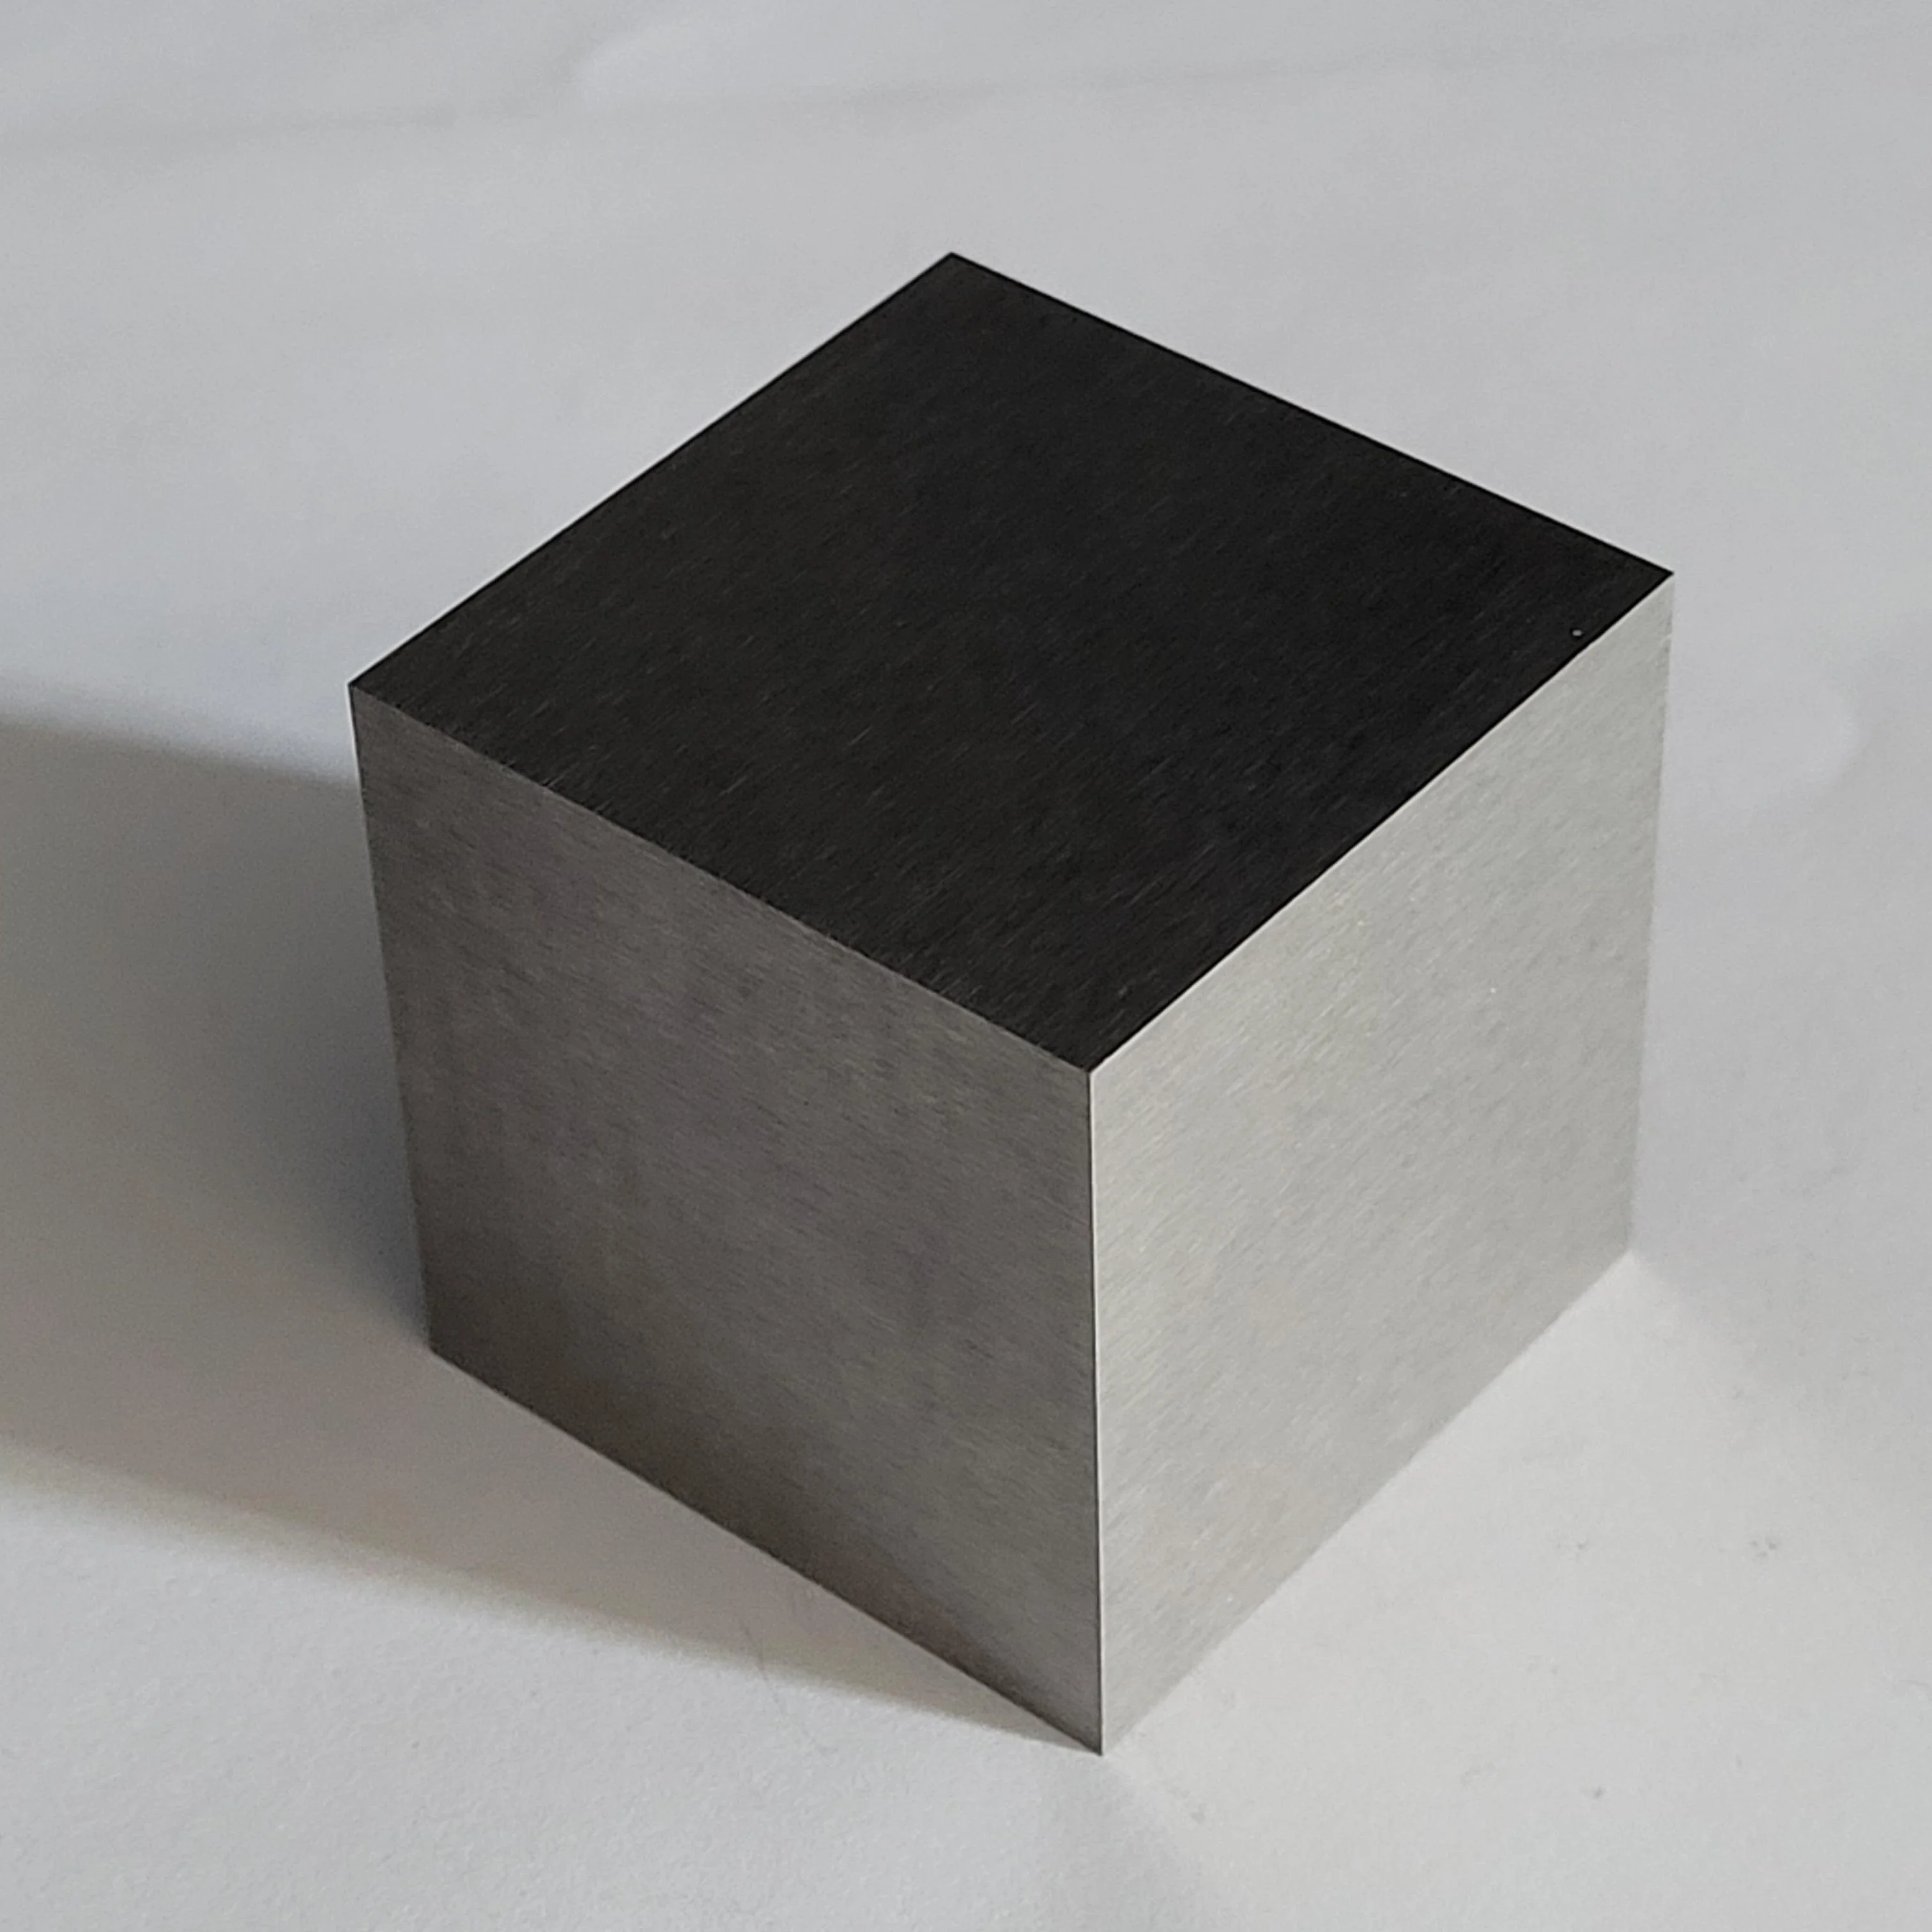 The 1 kg Tungsten Cube